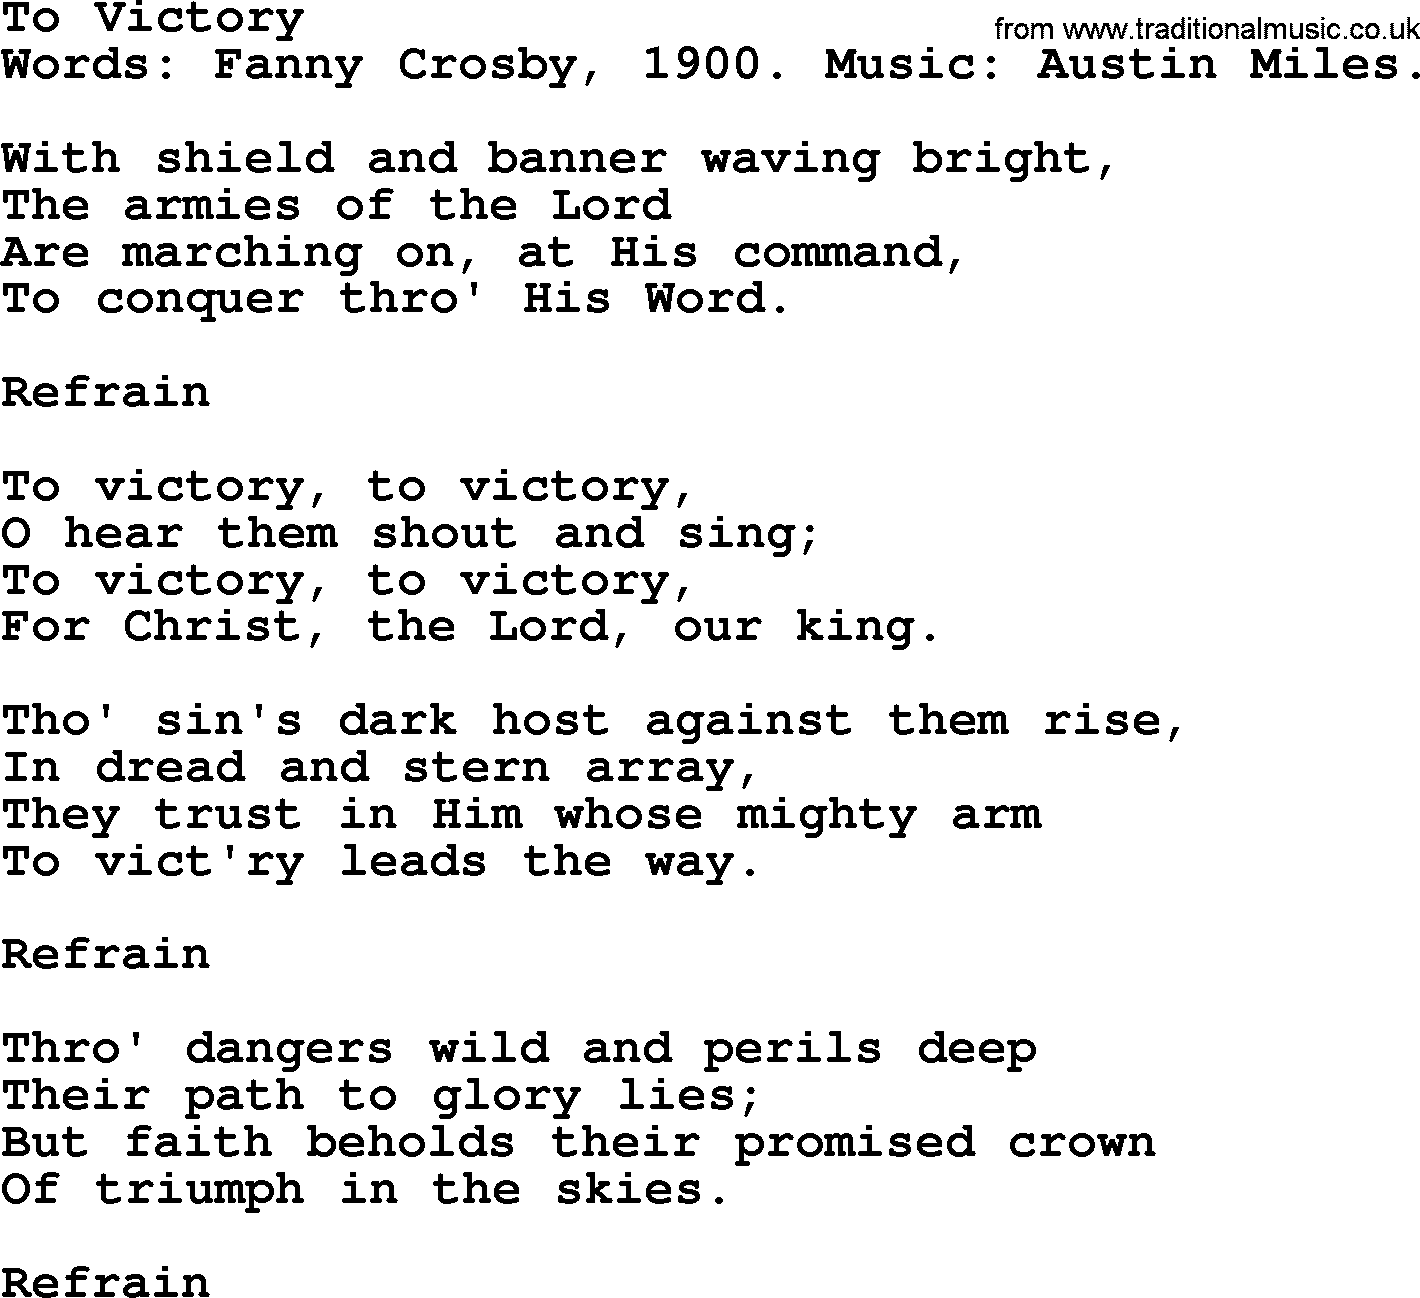 Fanny Crosby song: To Victory, lyrics